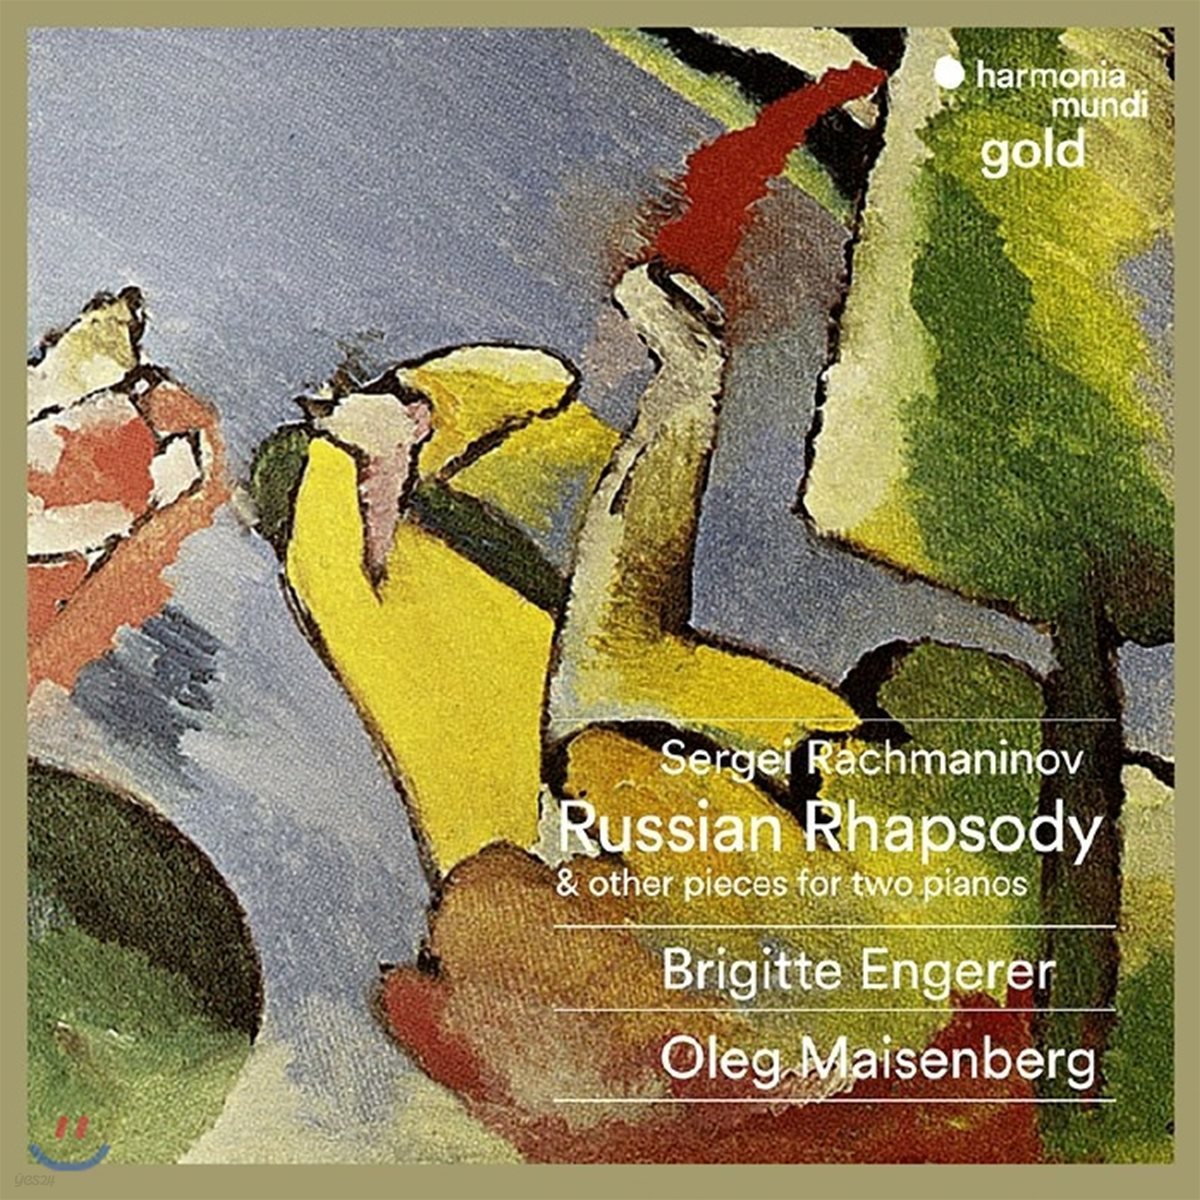 Brigitte Engerer / Oleg Maisenberg 라흐마니노프: 두대의 피아노를 위한 작품, 네 손을 위한 피아노 작품집 (Rachmaninov: Russian Rhapsody &amp; other pieces for two pianos)